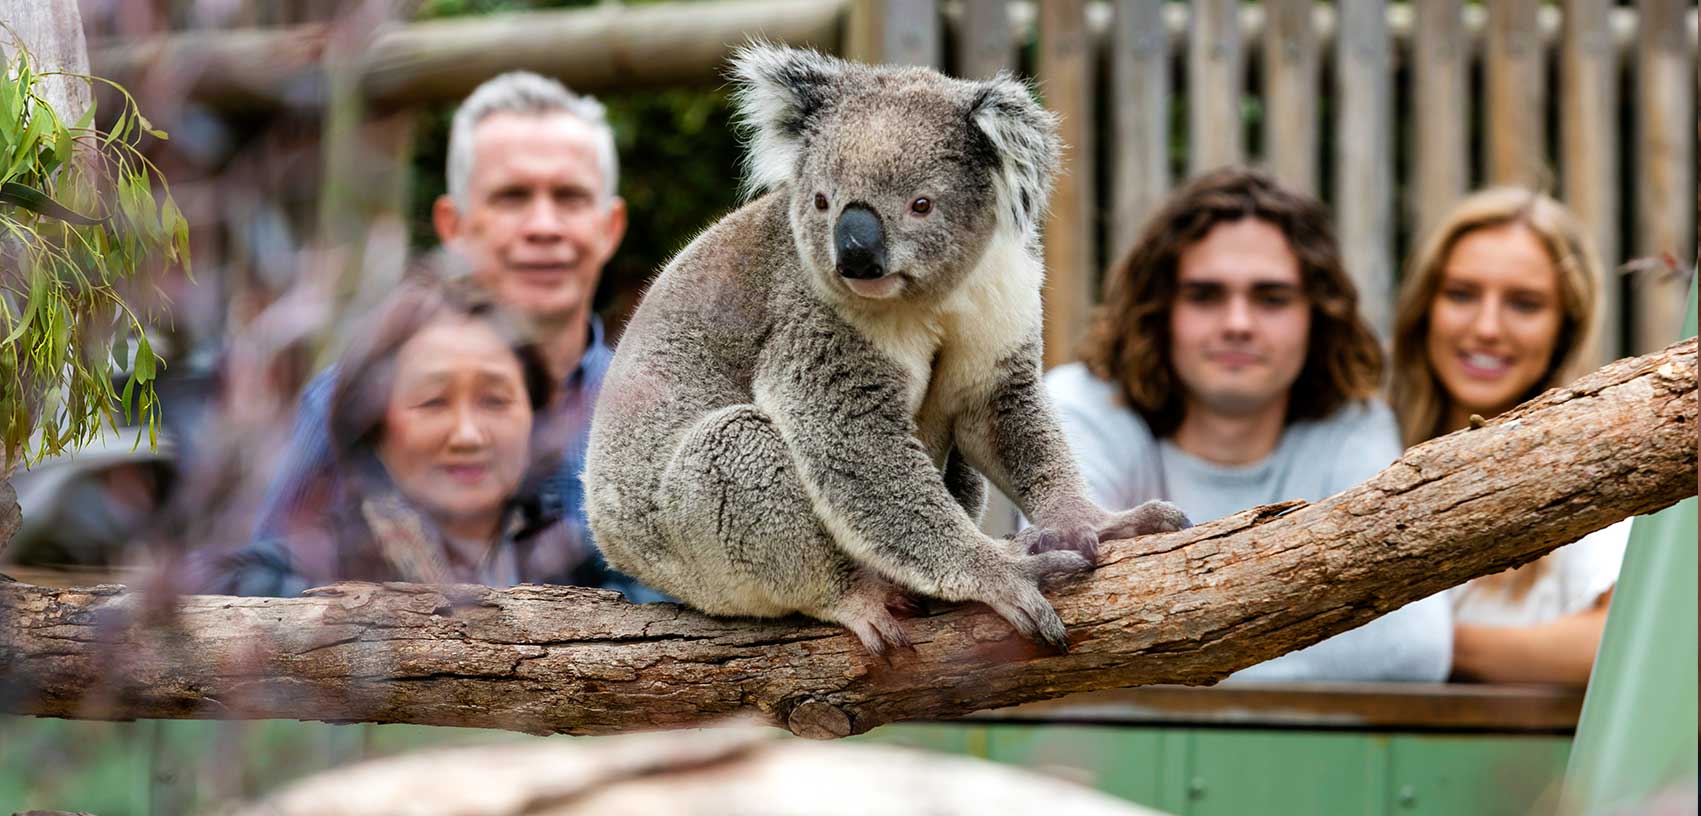 Visitors at Moonlit Sanctuary watching a koala climb a branch in its enclosure